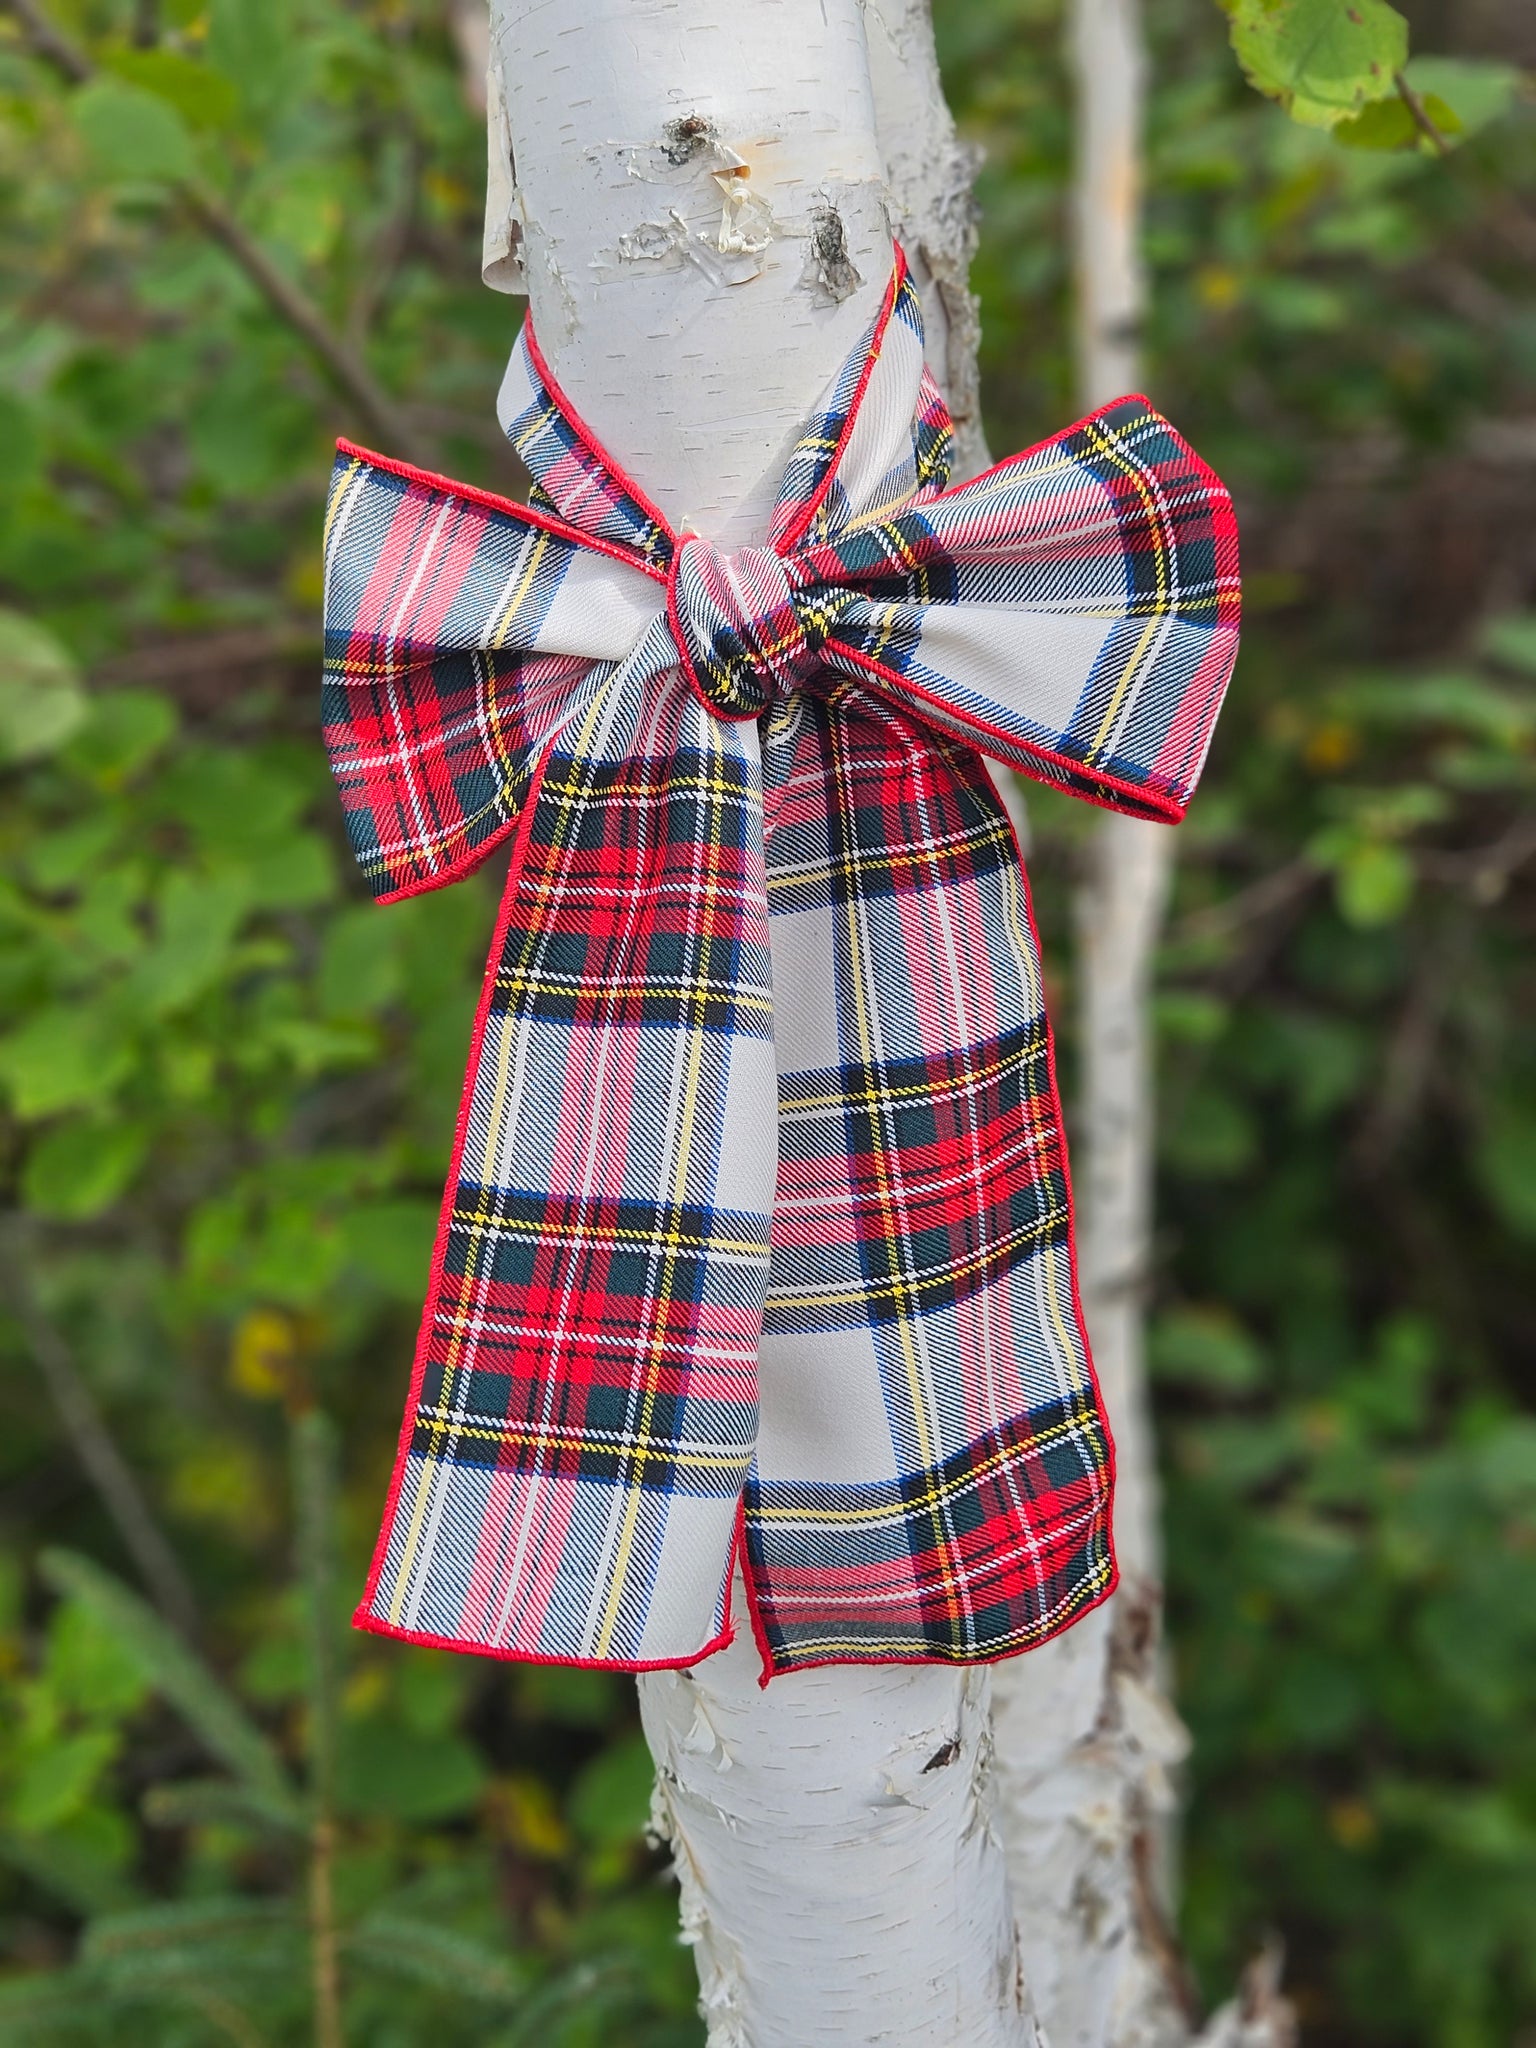 Dress Stewart tartan tree wrap for Christmas centerpiece and decorating